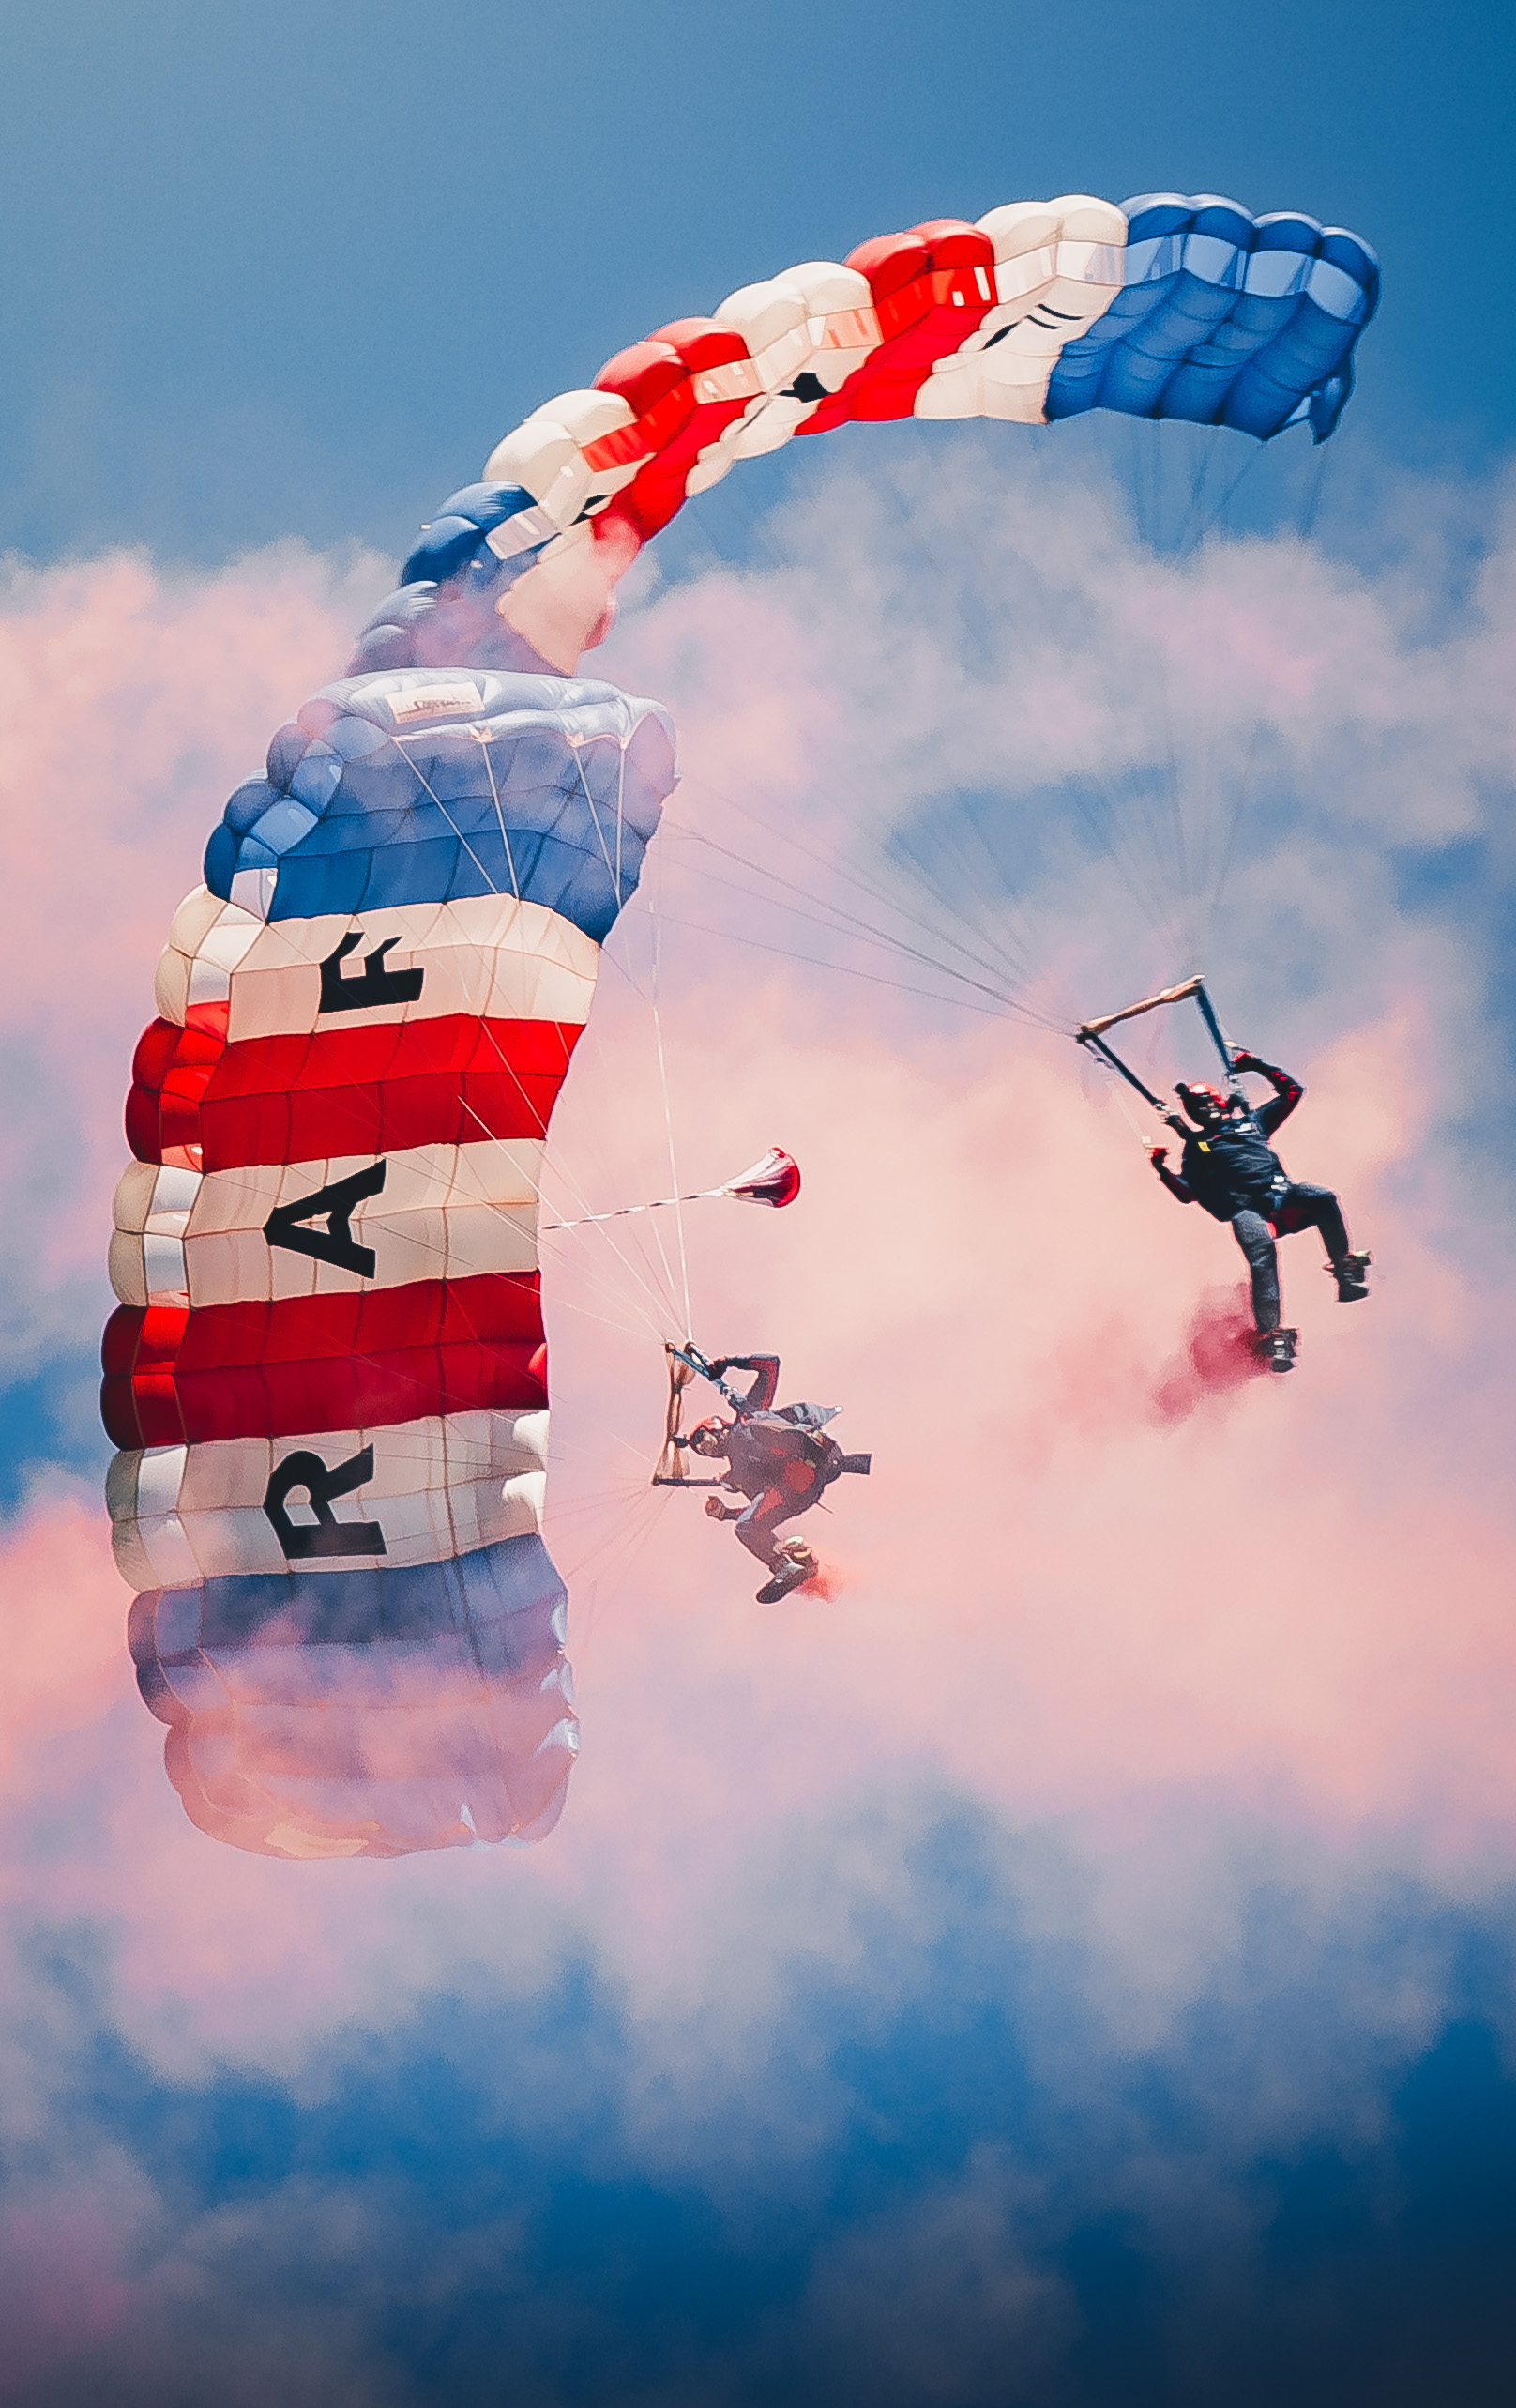 2 RAF parachutists landing amid red smoke